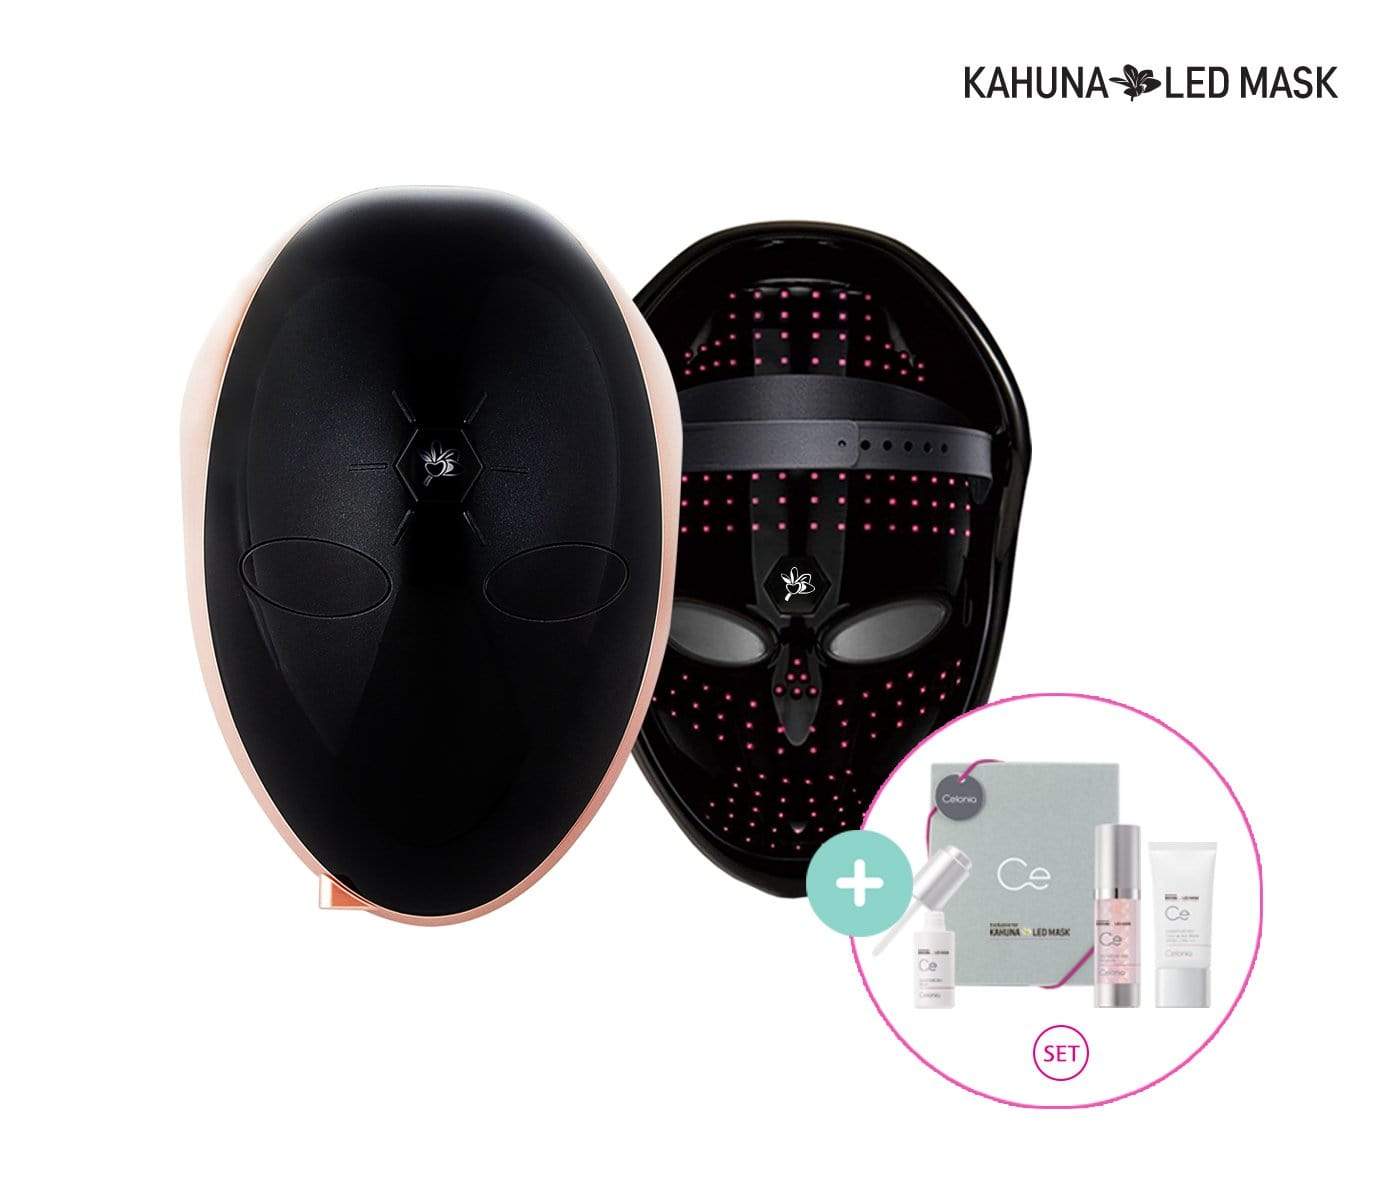 Ace Massage Chairs Kahuna Preium NIR LED Mask Premium Kahuna Mask